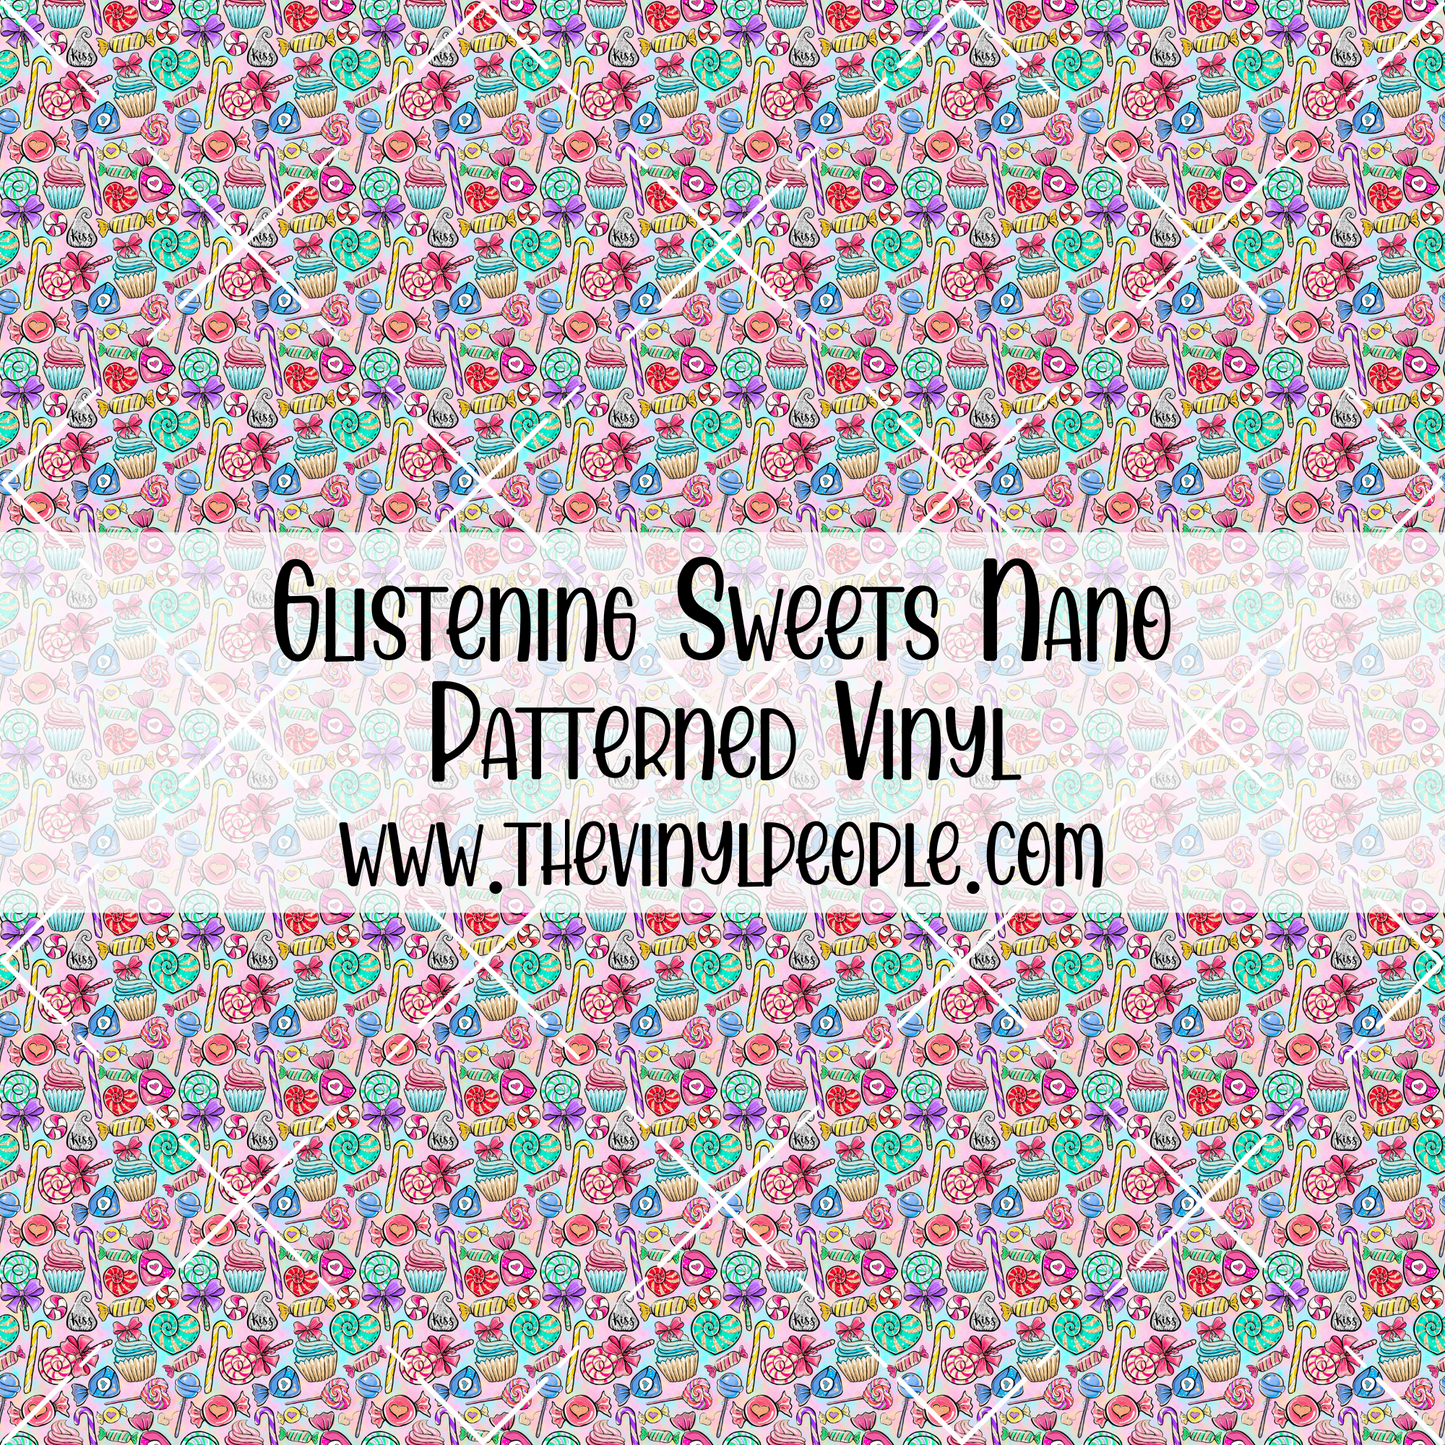 Glistening Sweets Patterned Vinyl